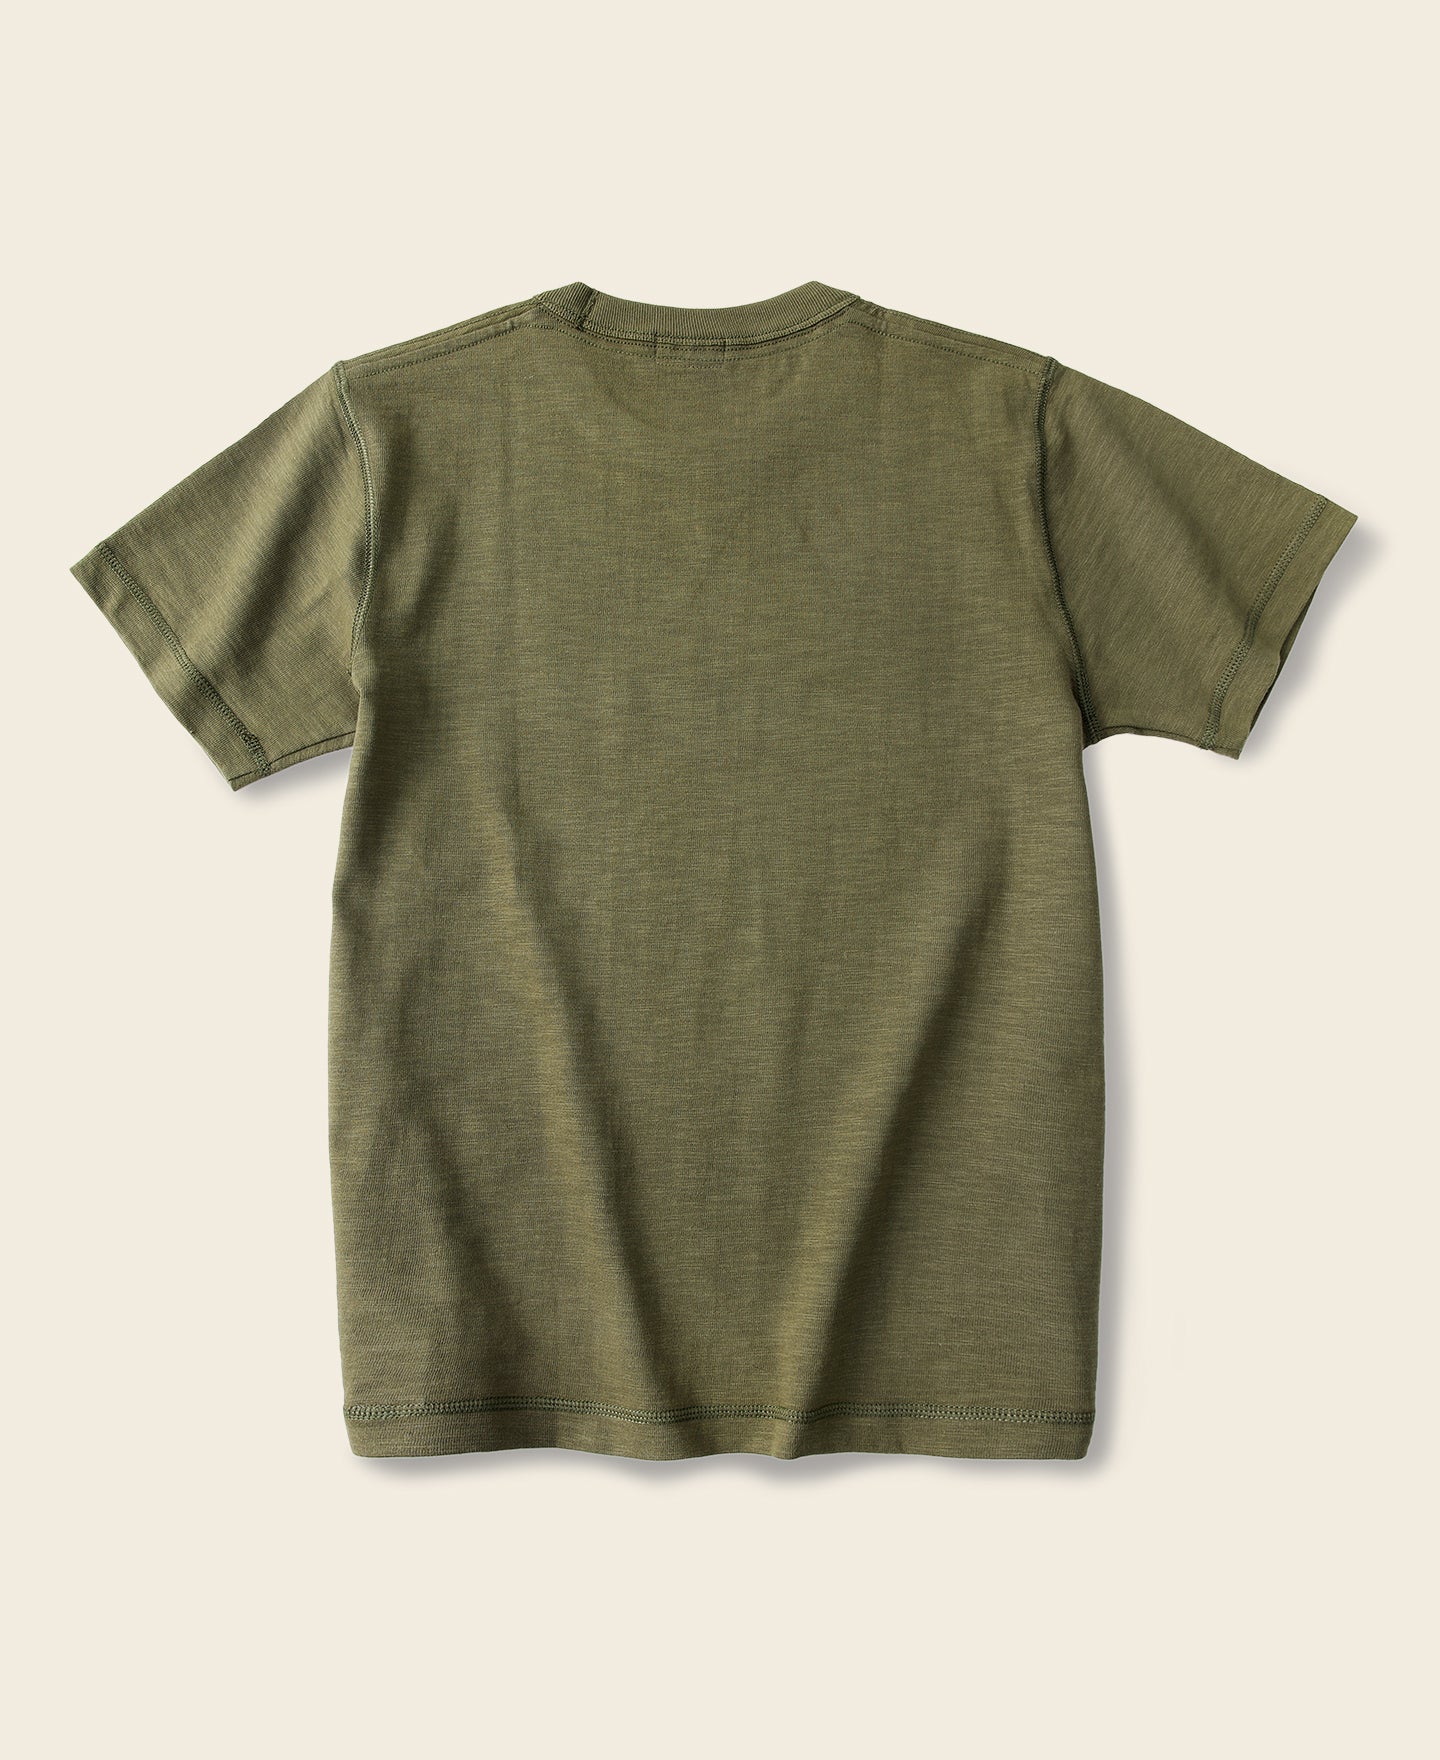 10.5 oz US Cotton Ring-spun V-Shaped Tubular Gusset T-Shirt - Green